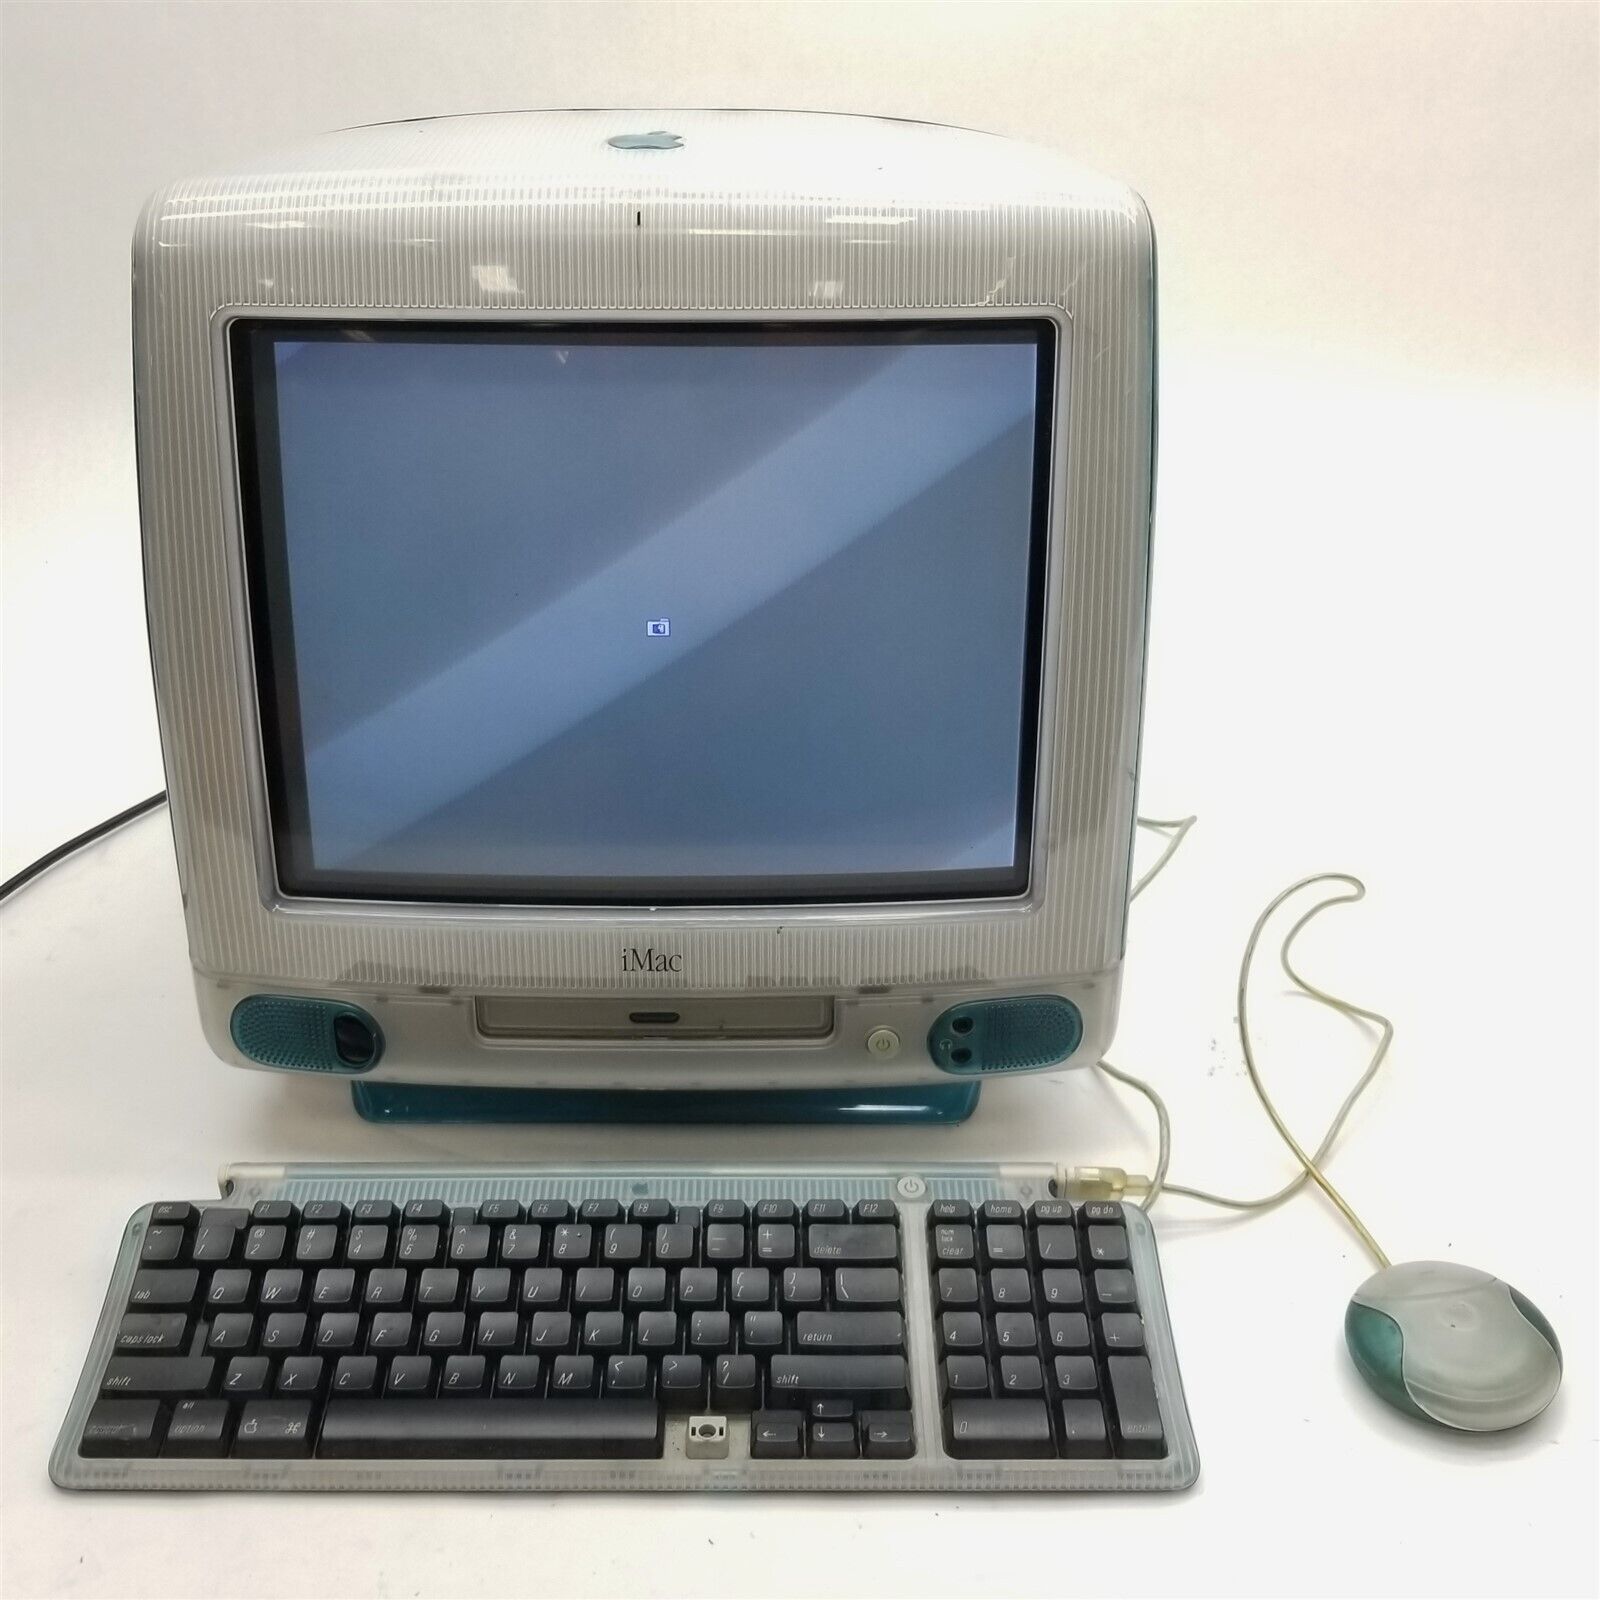 Apple iMac G3 M4984 1998 233MHz PowerPC Bondi Blue Vintage Computer w/KB & Mouse